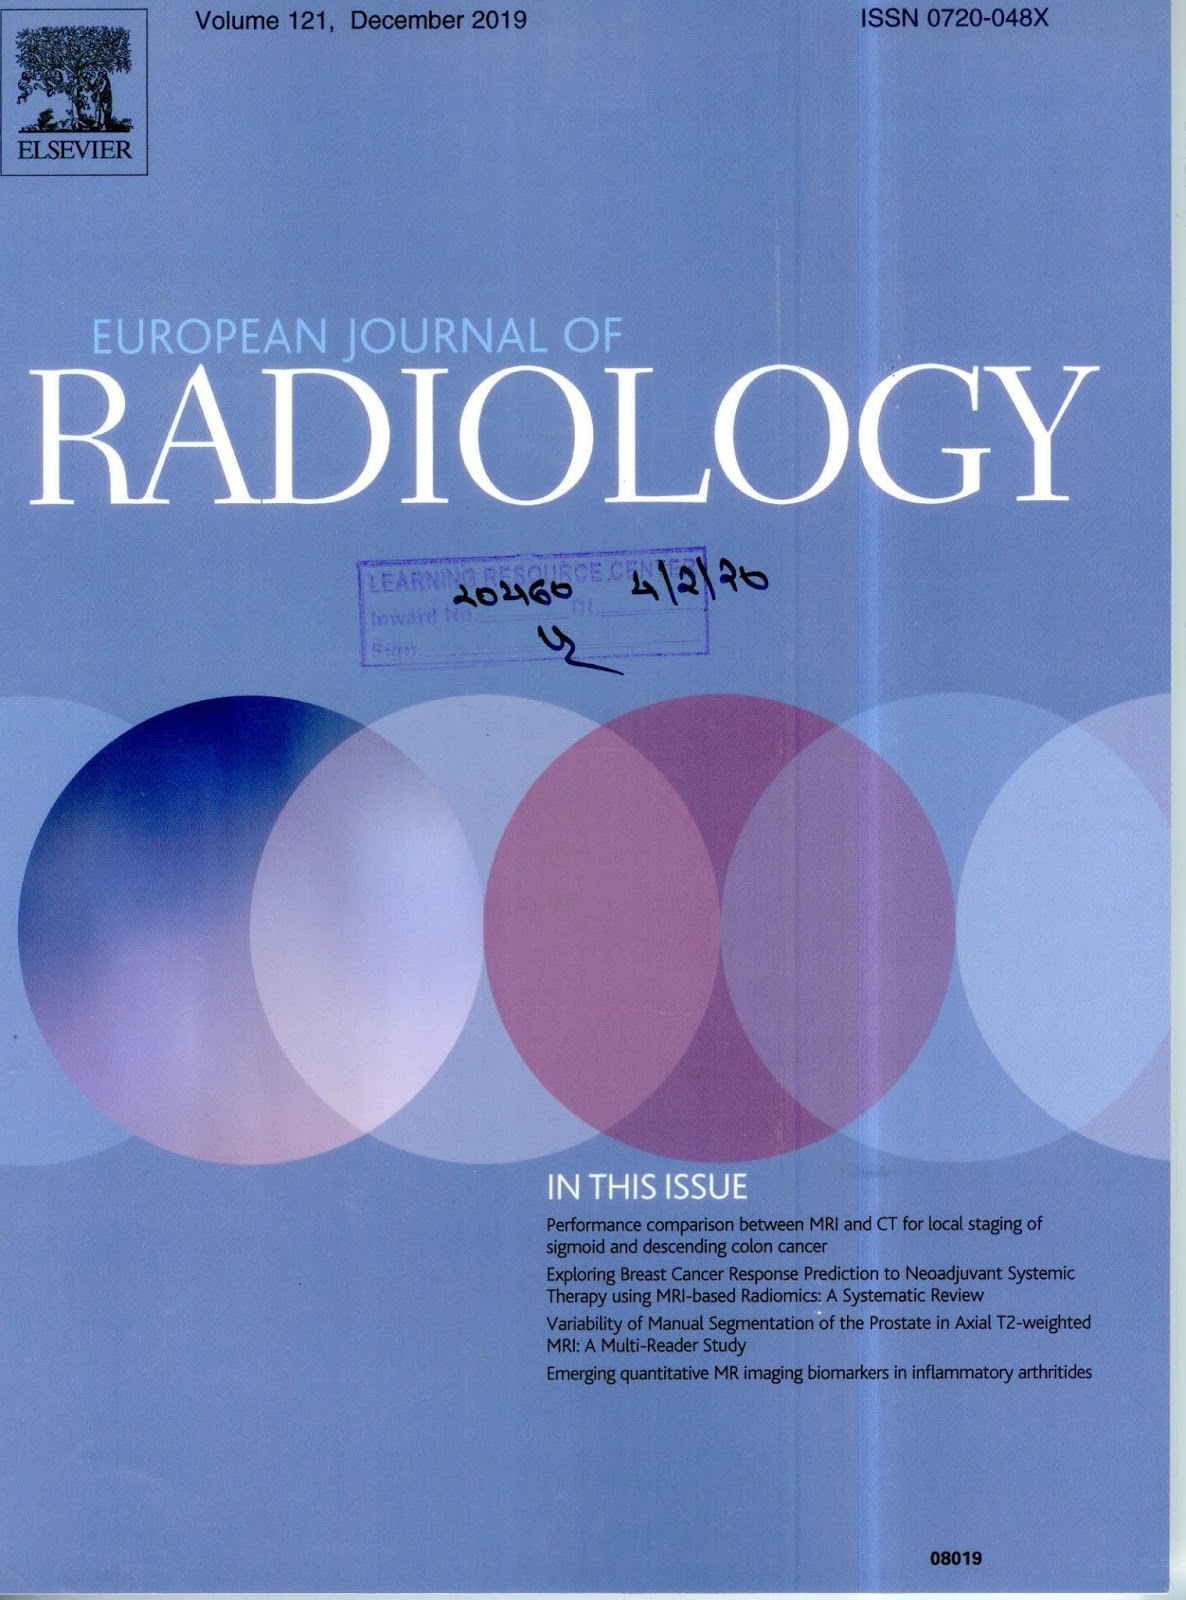 https://www.sciencedirect.com/journal/european-journal-of-radiology/vol/121/suppl/C